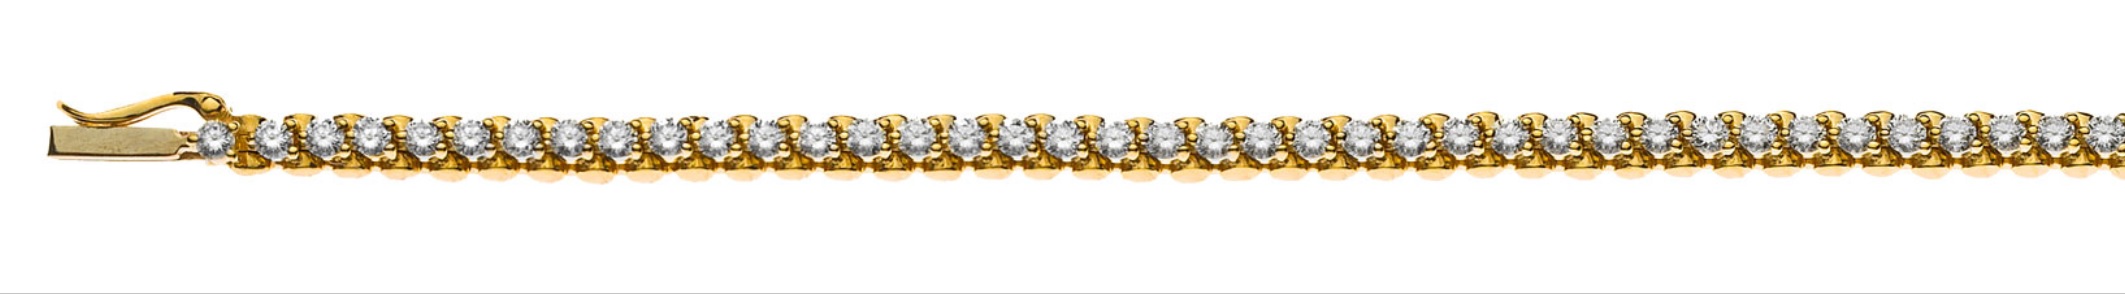 AURONOS Prestige Bracelet 18K Yellow Gold 89 Diamonds 1.44ct 18cm